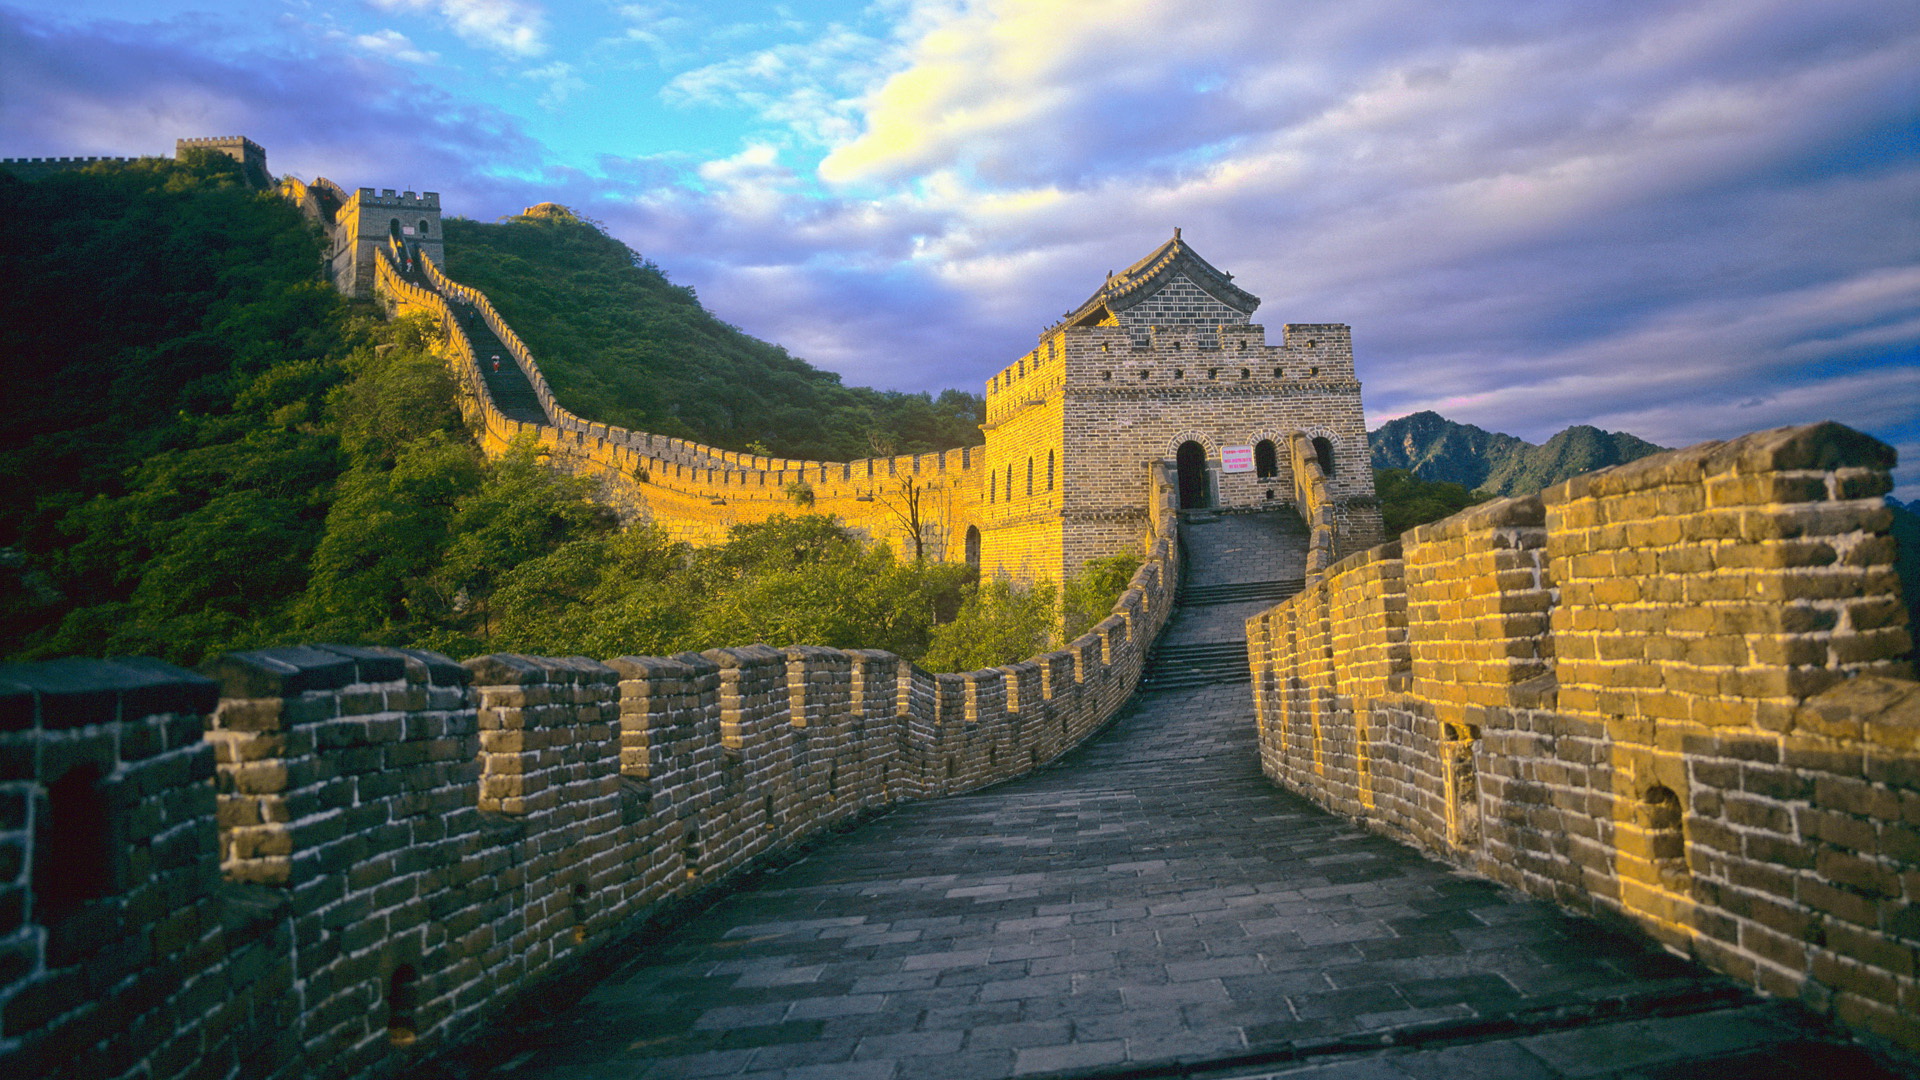 Покраше ая стена. Великая китайская стена Династия Цинь. Мутяньюй Великая китайская стена. Достопримечательности Великая китайская стена. Пекин достопримечательности стена.